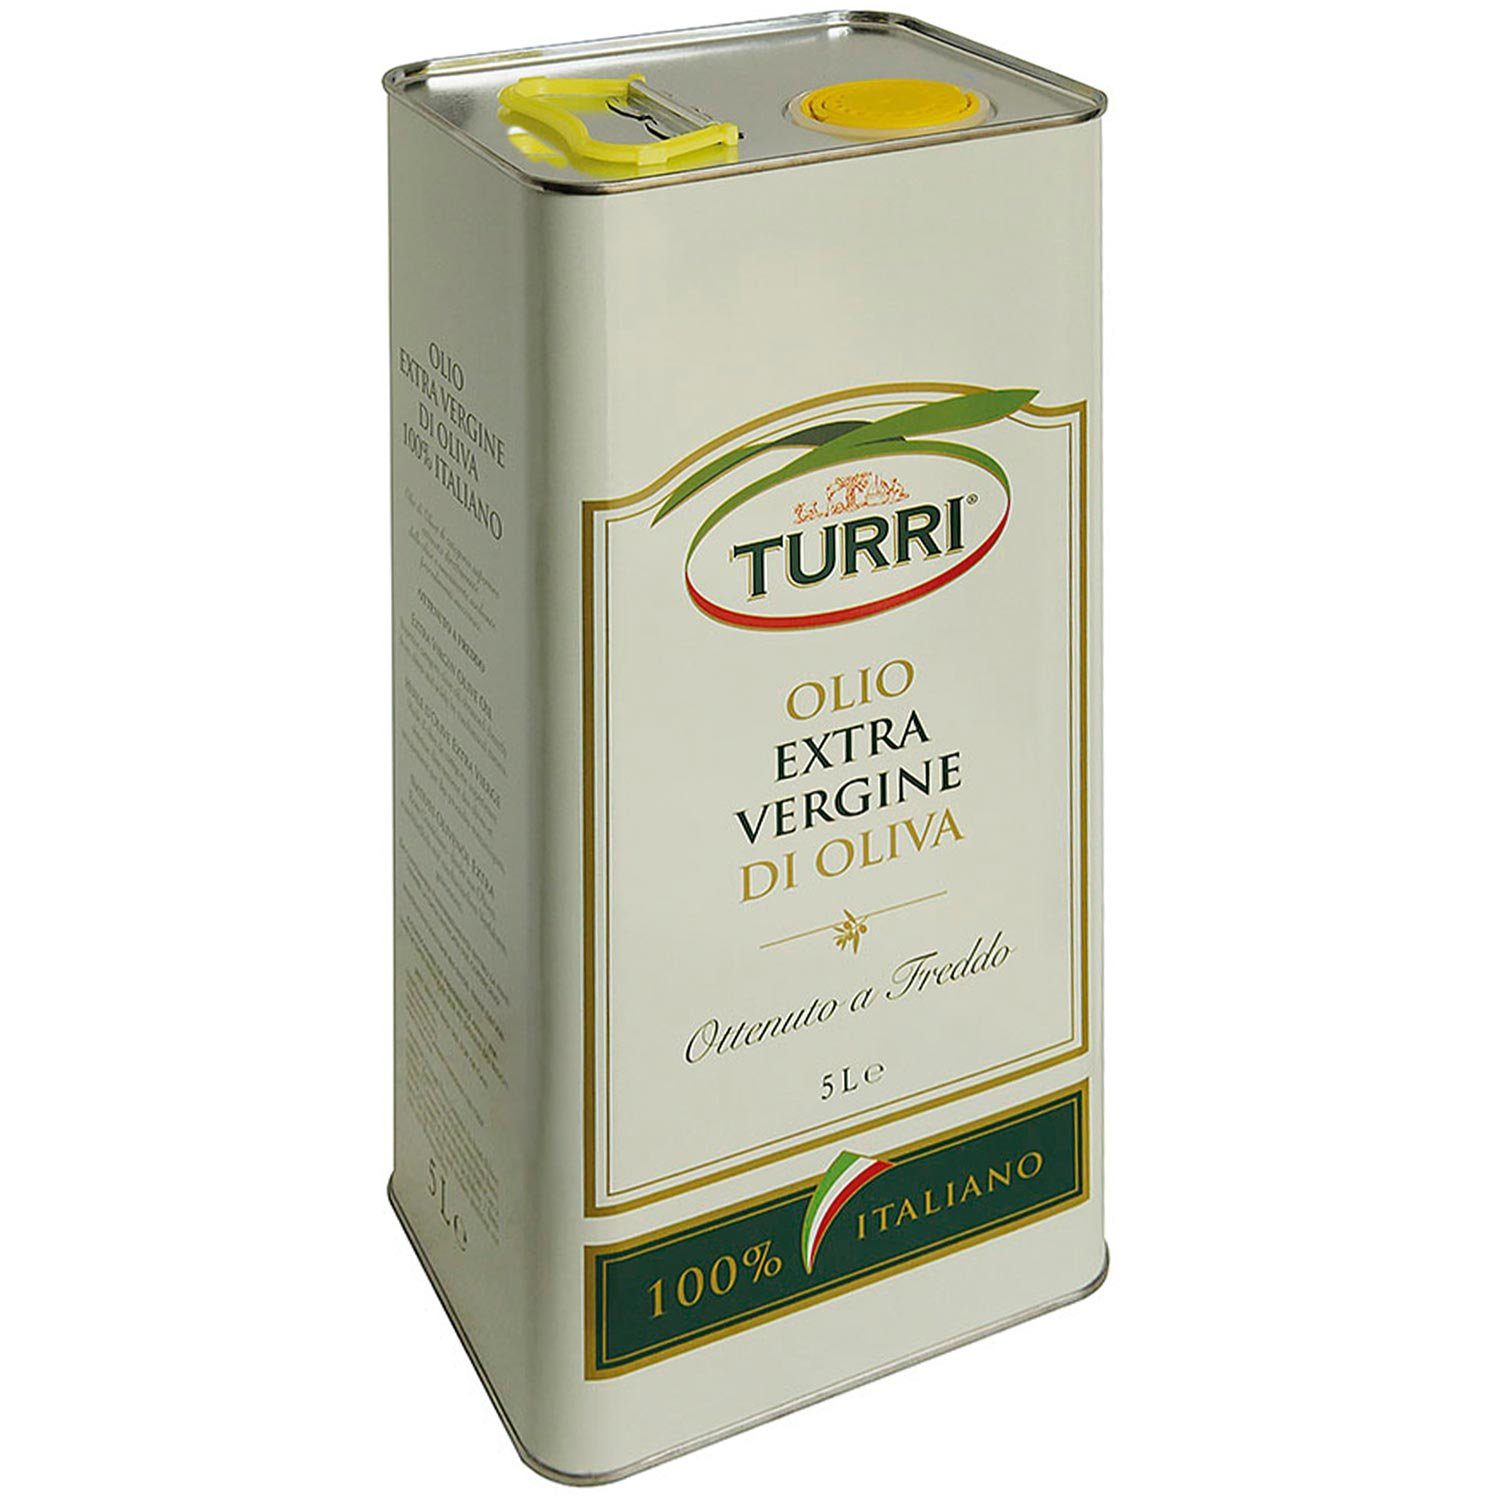 Liter Kanister, extra Turri vergine, Landshop24 Gewürzregal Speiseöl Original 100% Italien, Italien 5 20-12-2024 Gardasee Olivenöl 1-tlg., MHD: